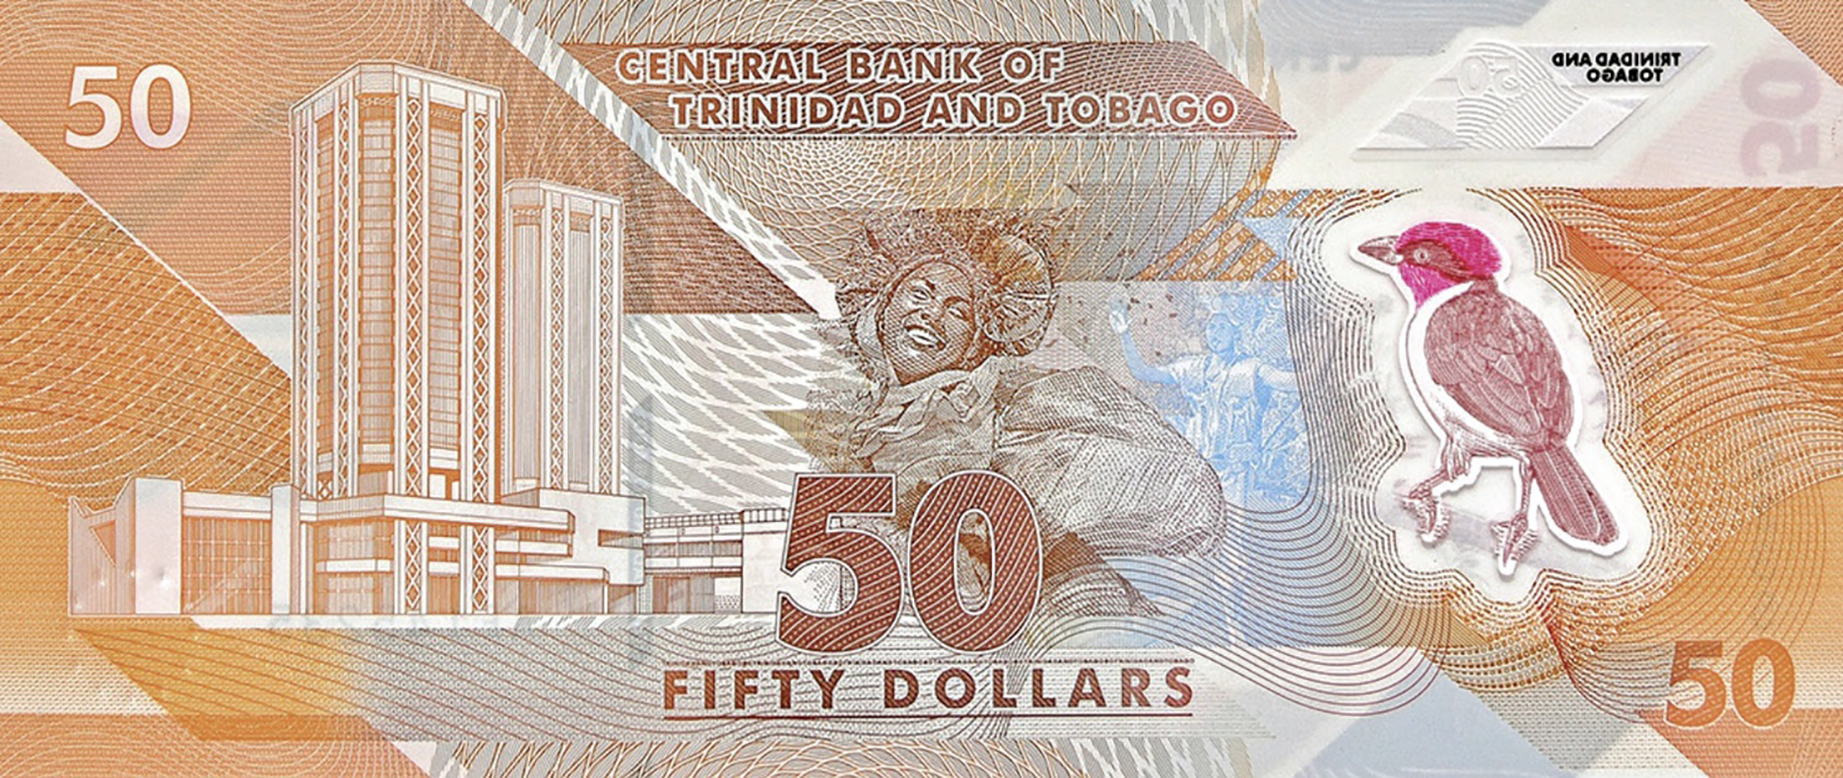 Trinidad And Tobago New 50 Dollar Polymer Note B240a Confirmed Banknotenews